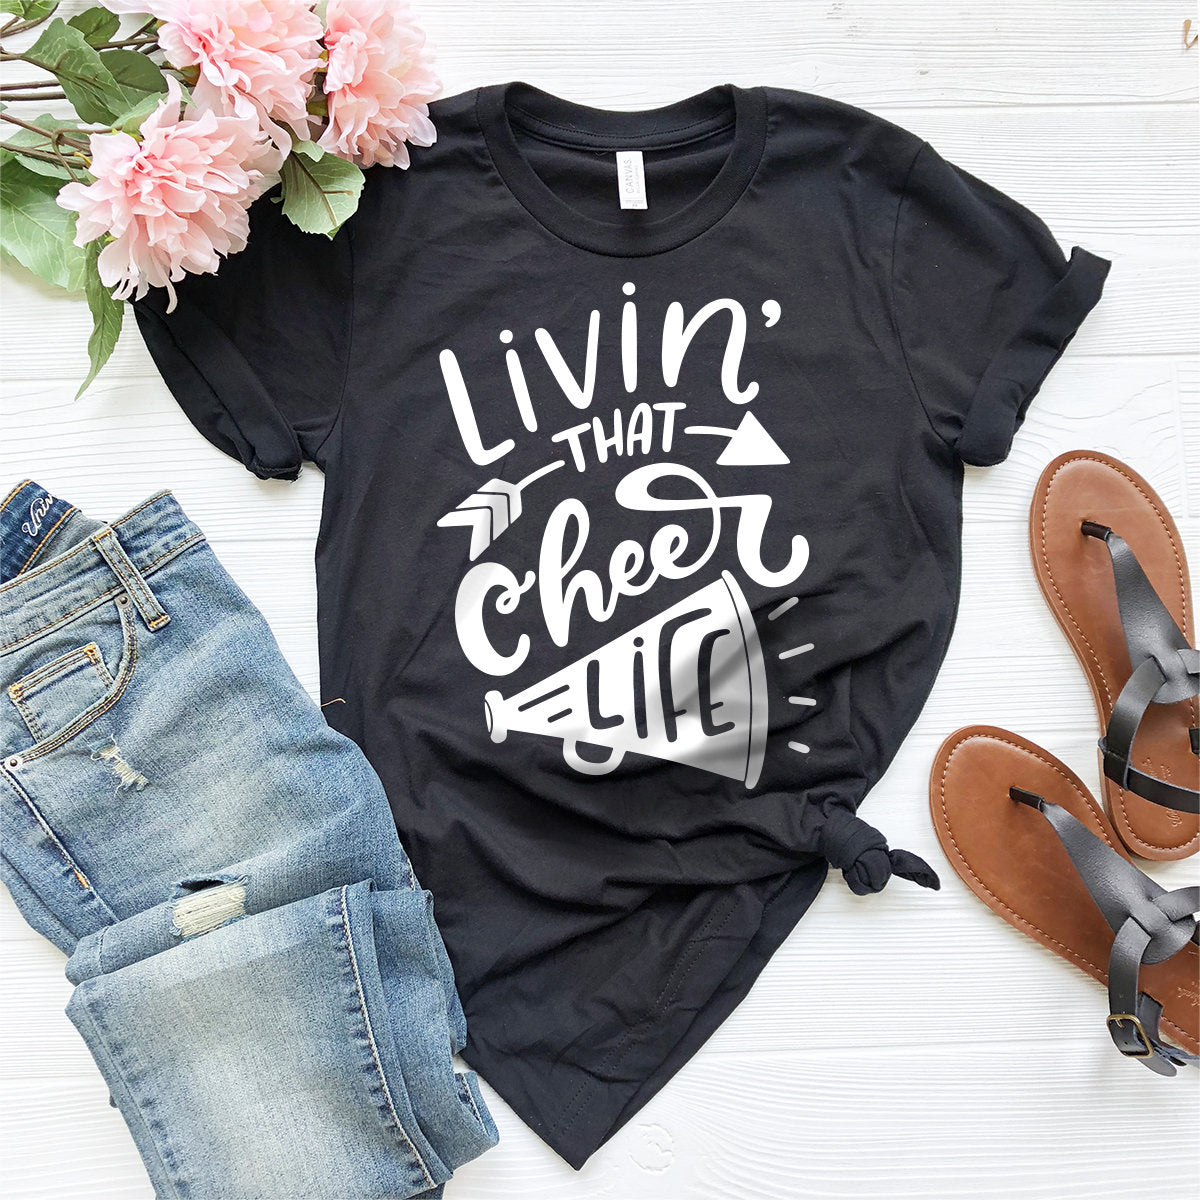 Living That Cheer Life Shirt, Cheer Tribe Shirt, Sport Mom Shirt, Cheer Life Shirt, Cheerleading T-Shirt, Cheer Mom Shirt, Cheer Tee, - Fastdeliverytees.com